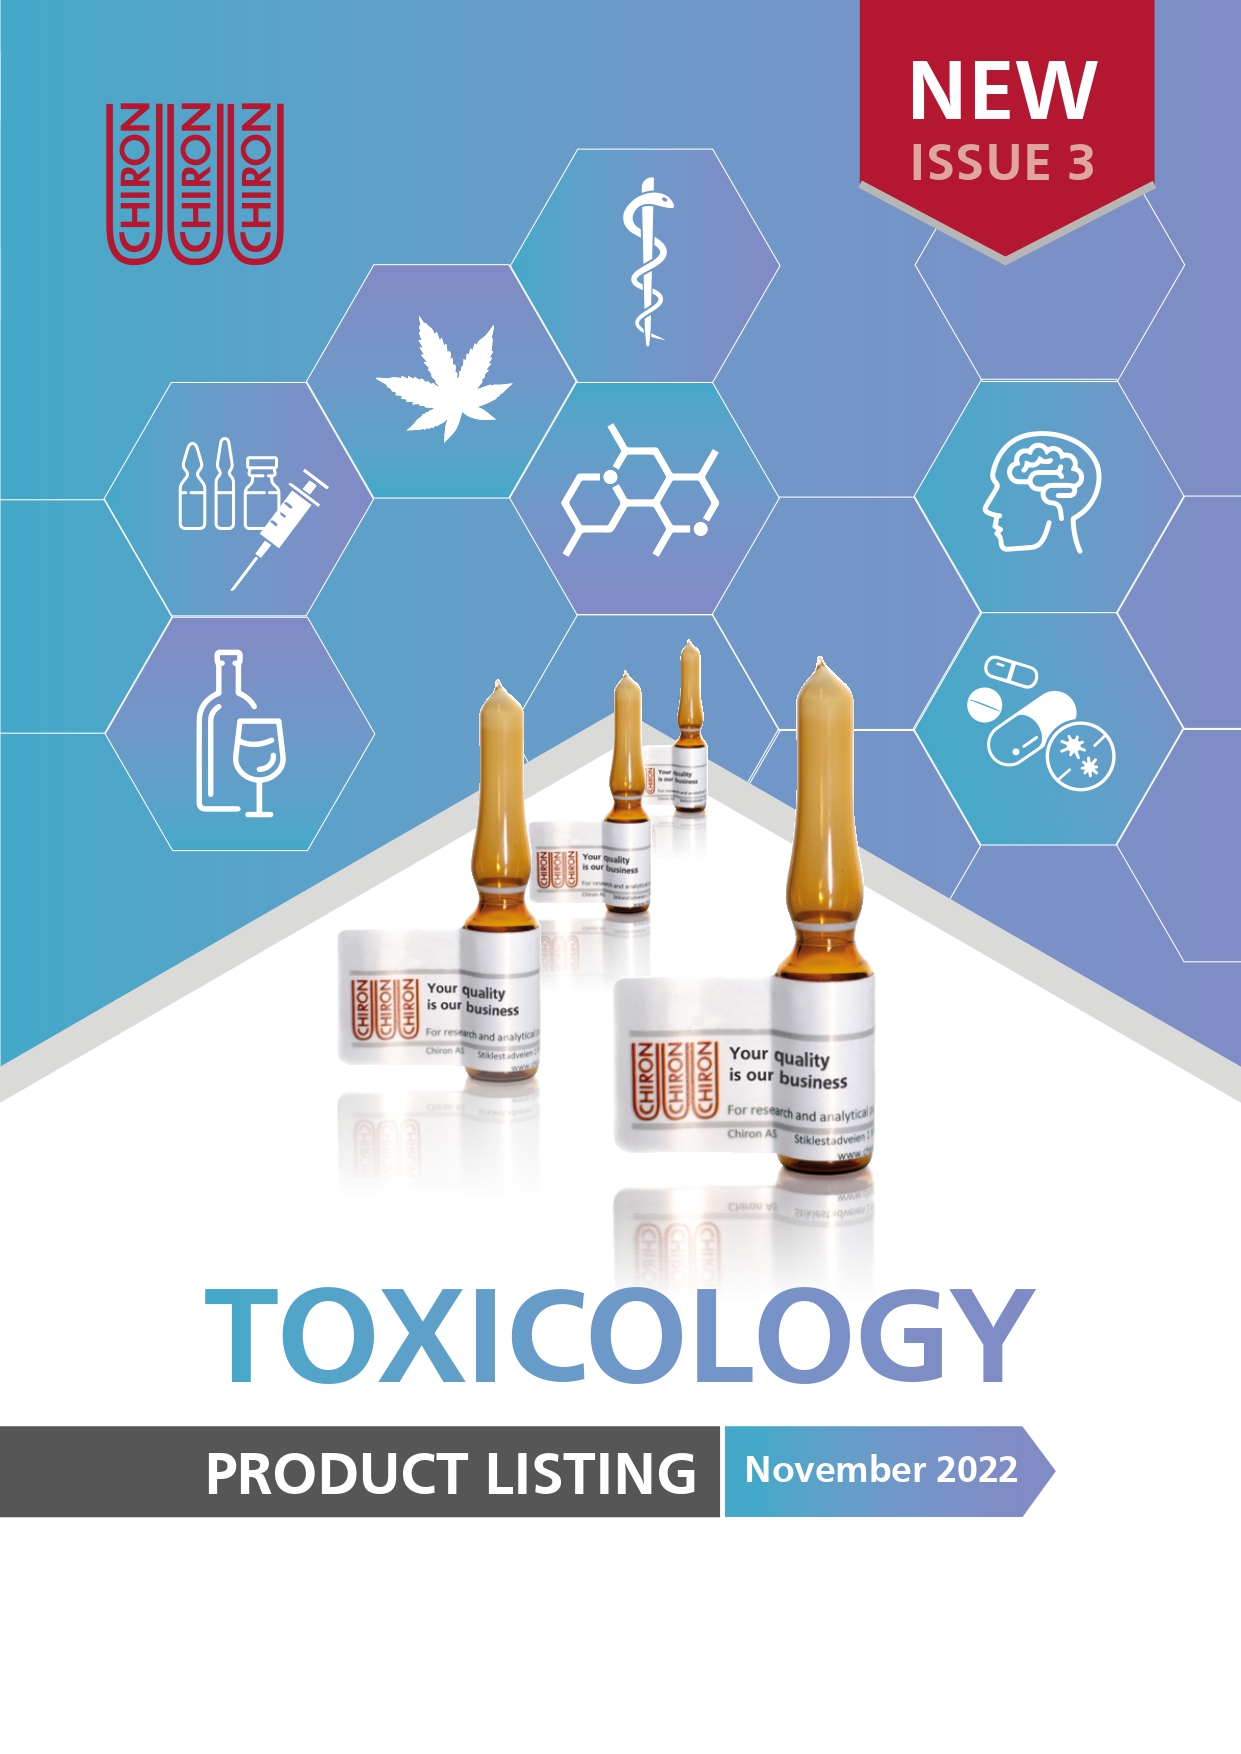 New Toxicology Product Issue 3 | November 2022